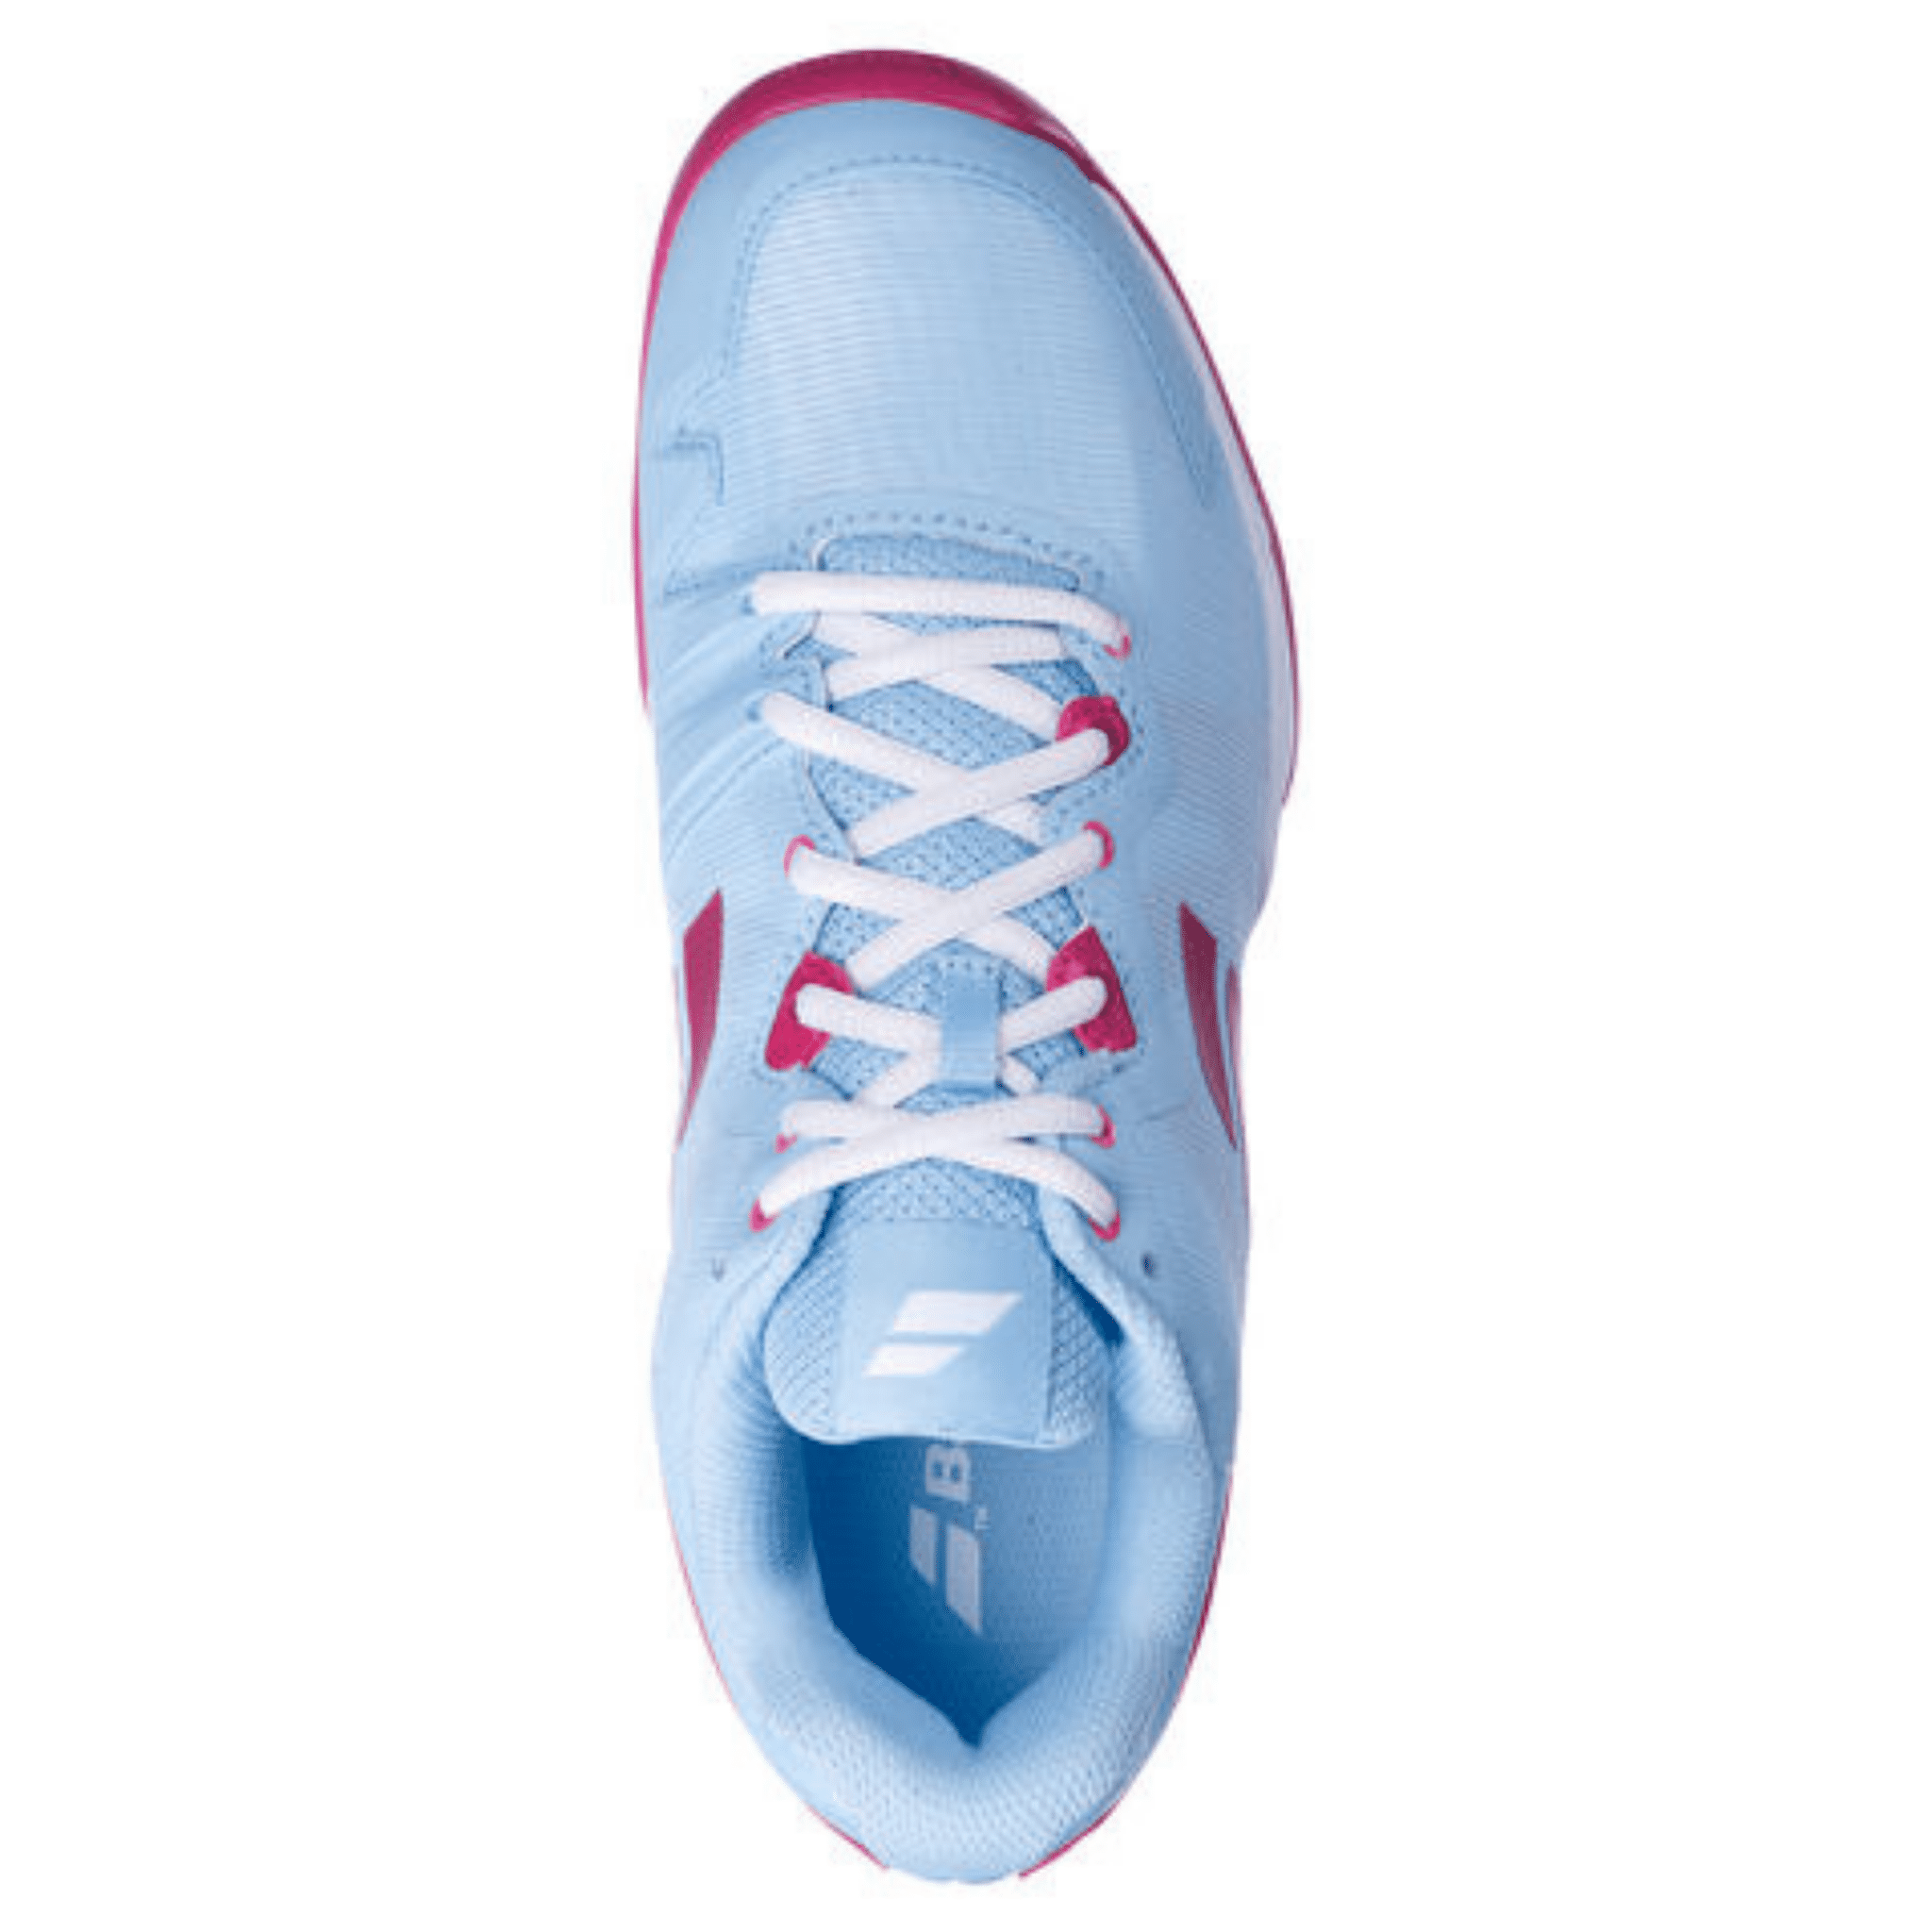 Babolat SFX3 All Court Women's Tennis Shoe - Clearwater/Cherry